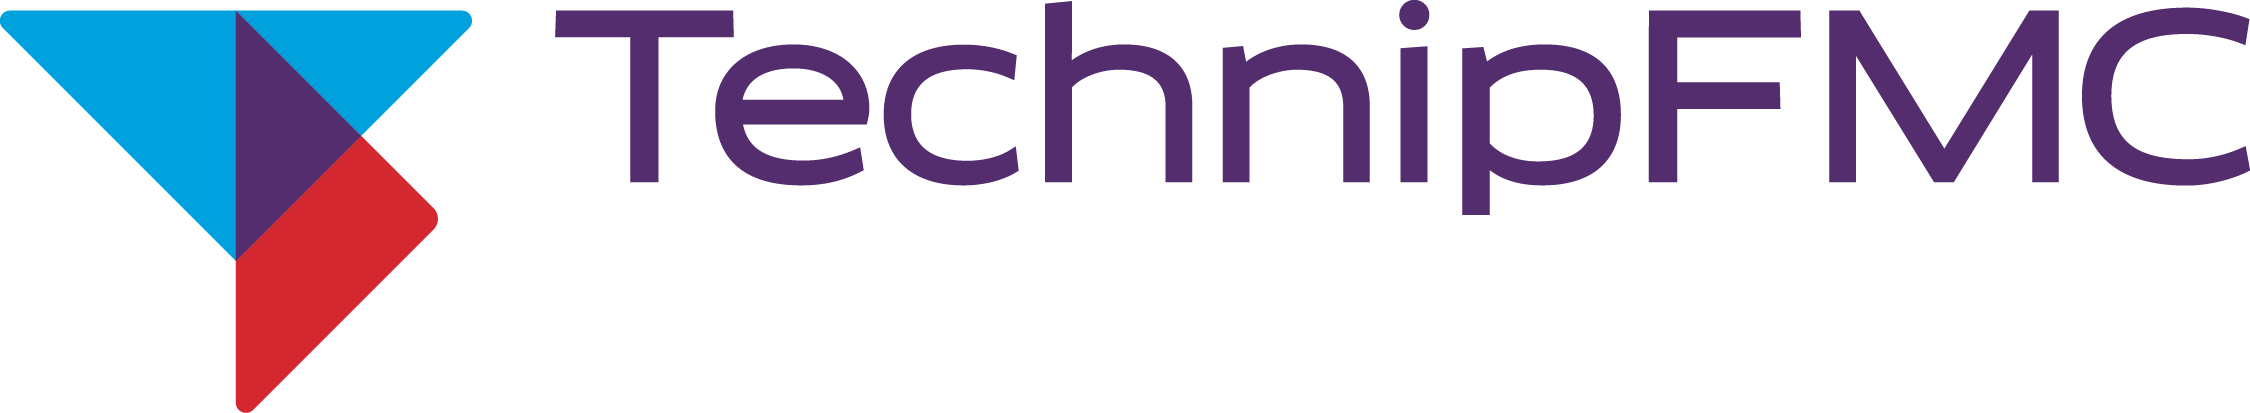 technipfmc-logo.png